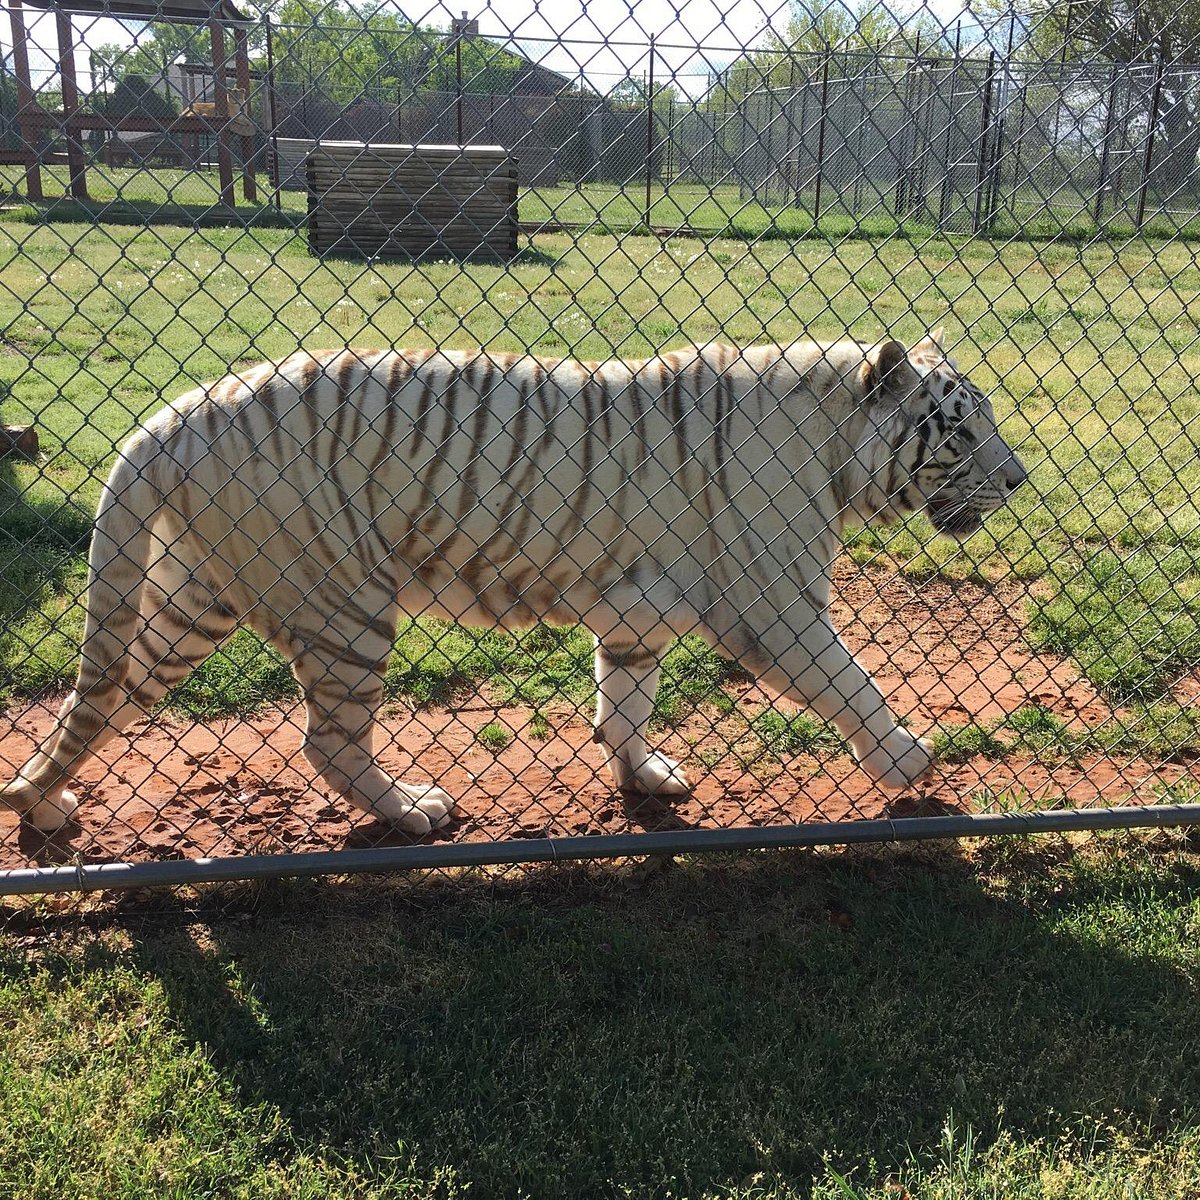 tiger safari zoological park updates